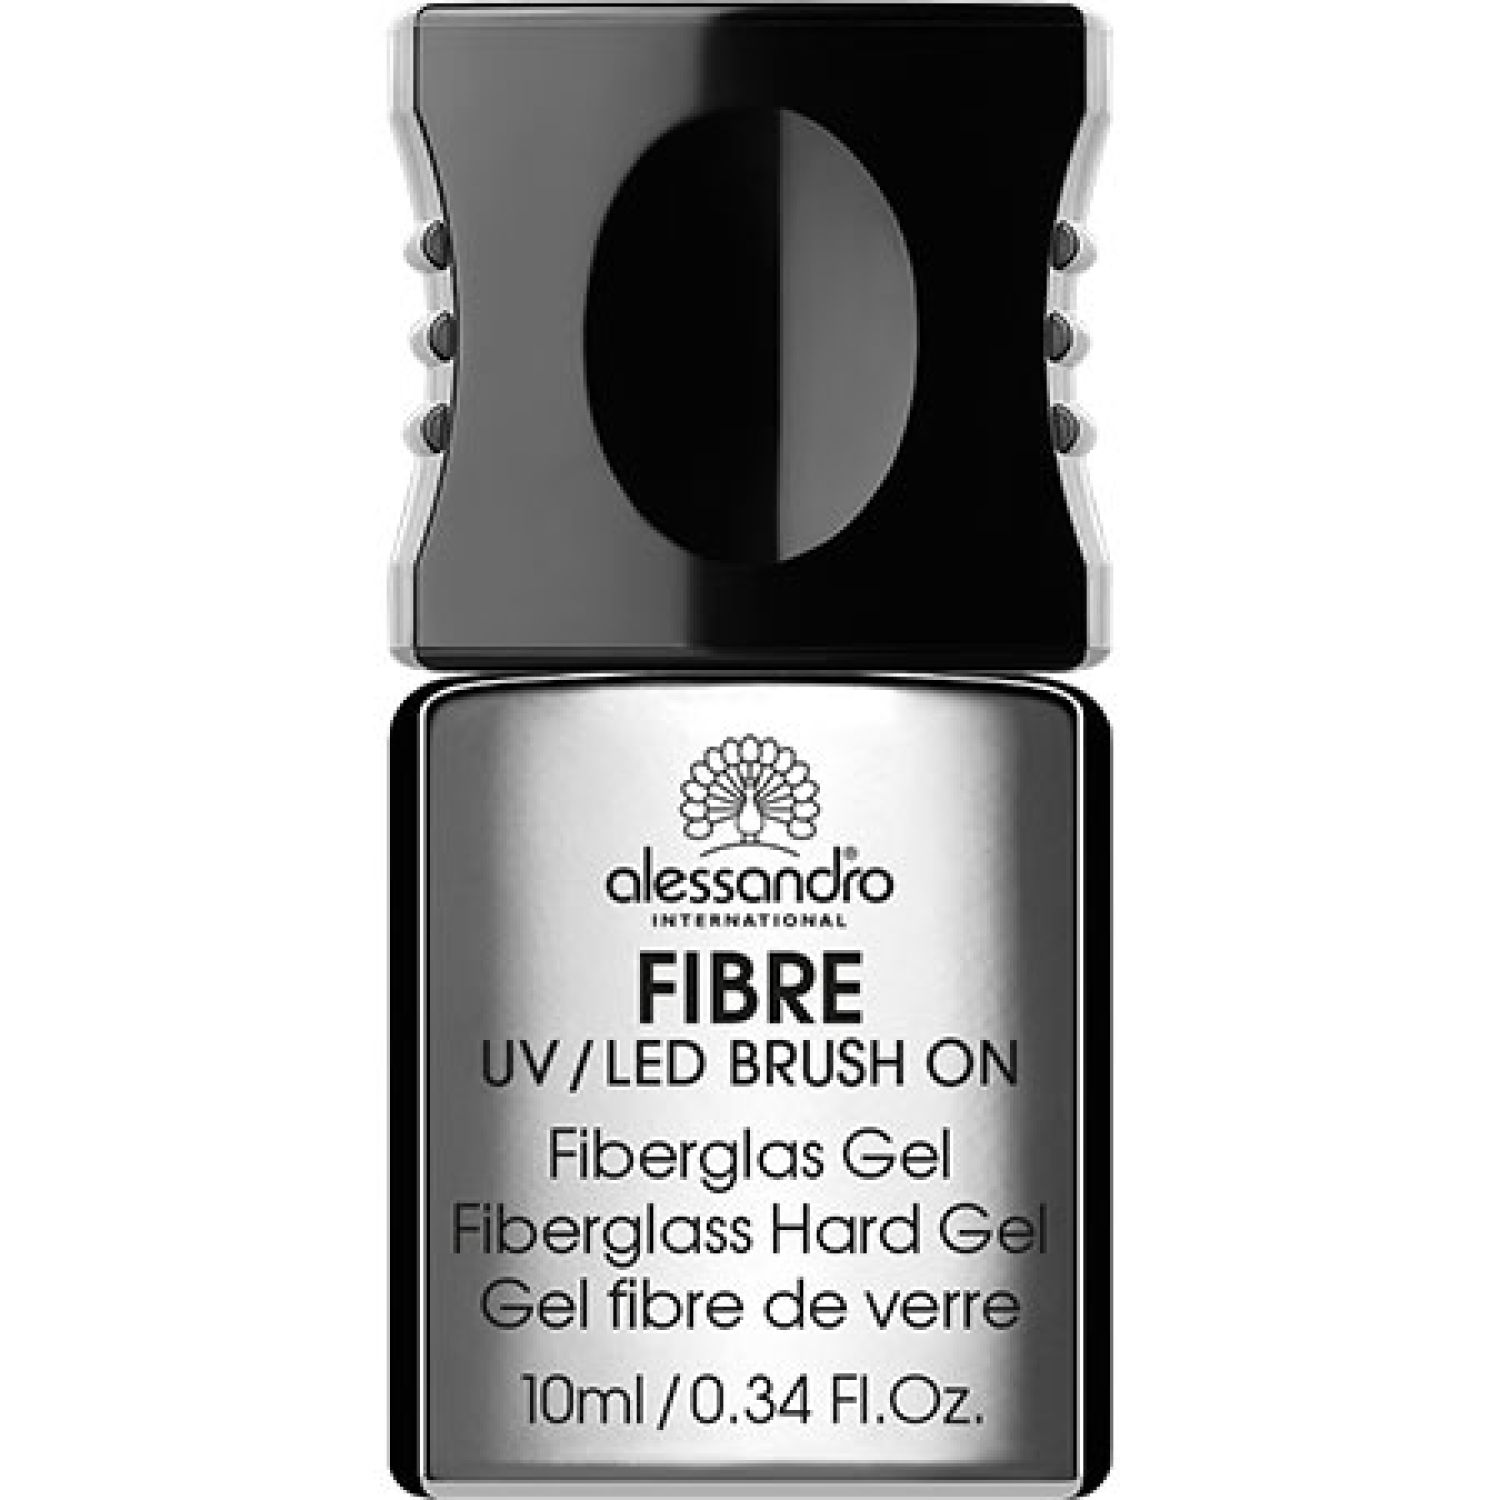 Fibre Fiberglas Gel 10 ml